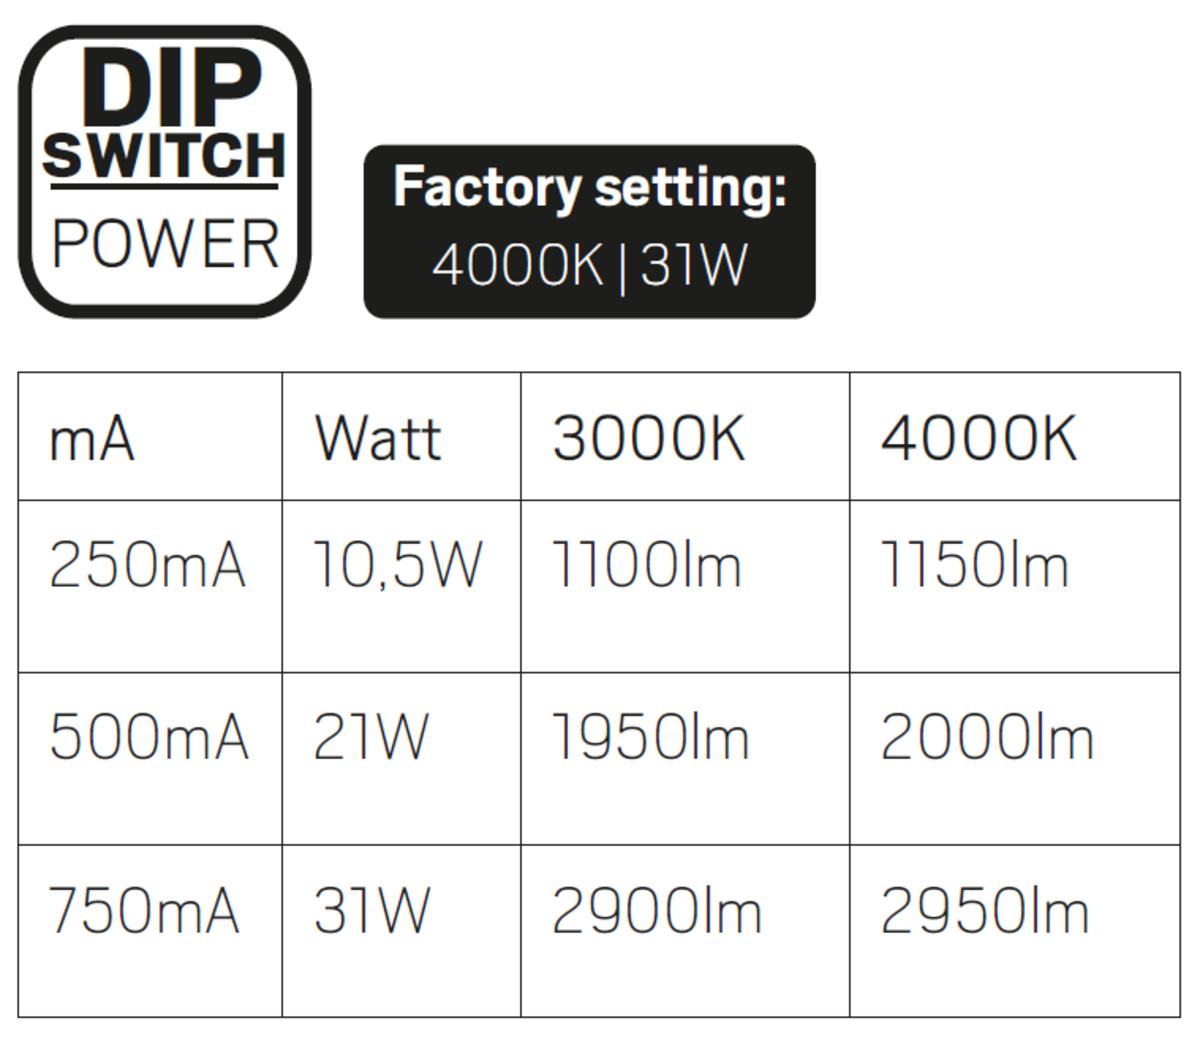 Sharp_DIP-switch Power.jpg